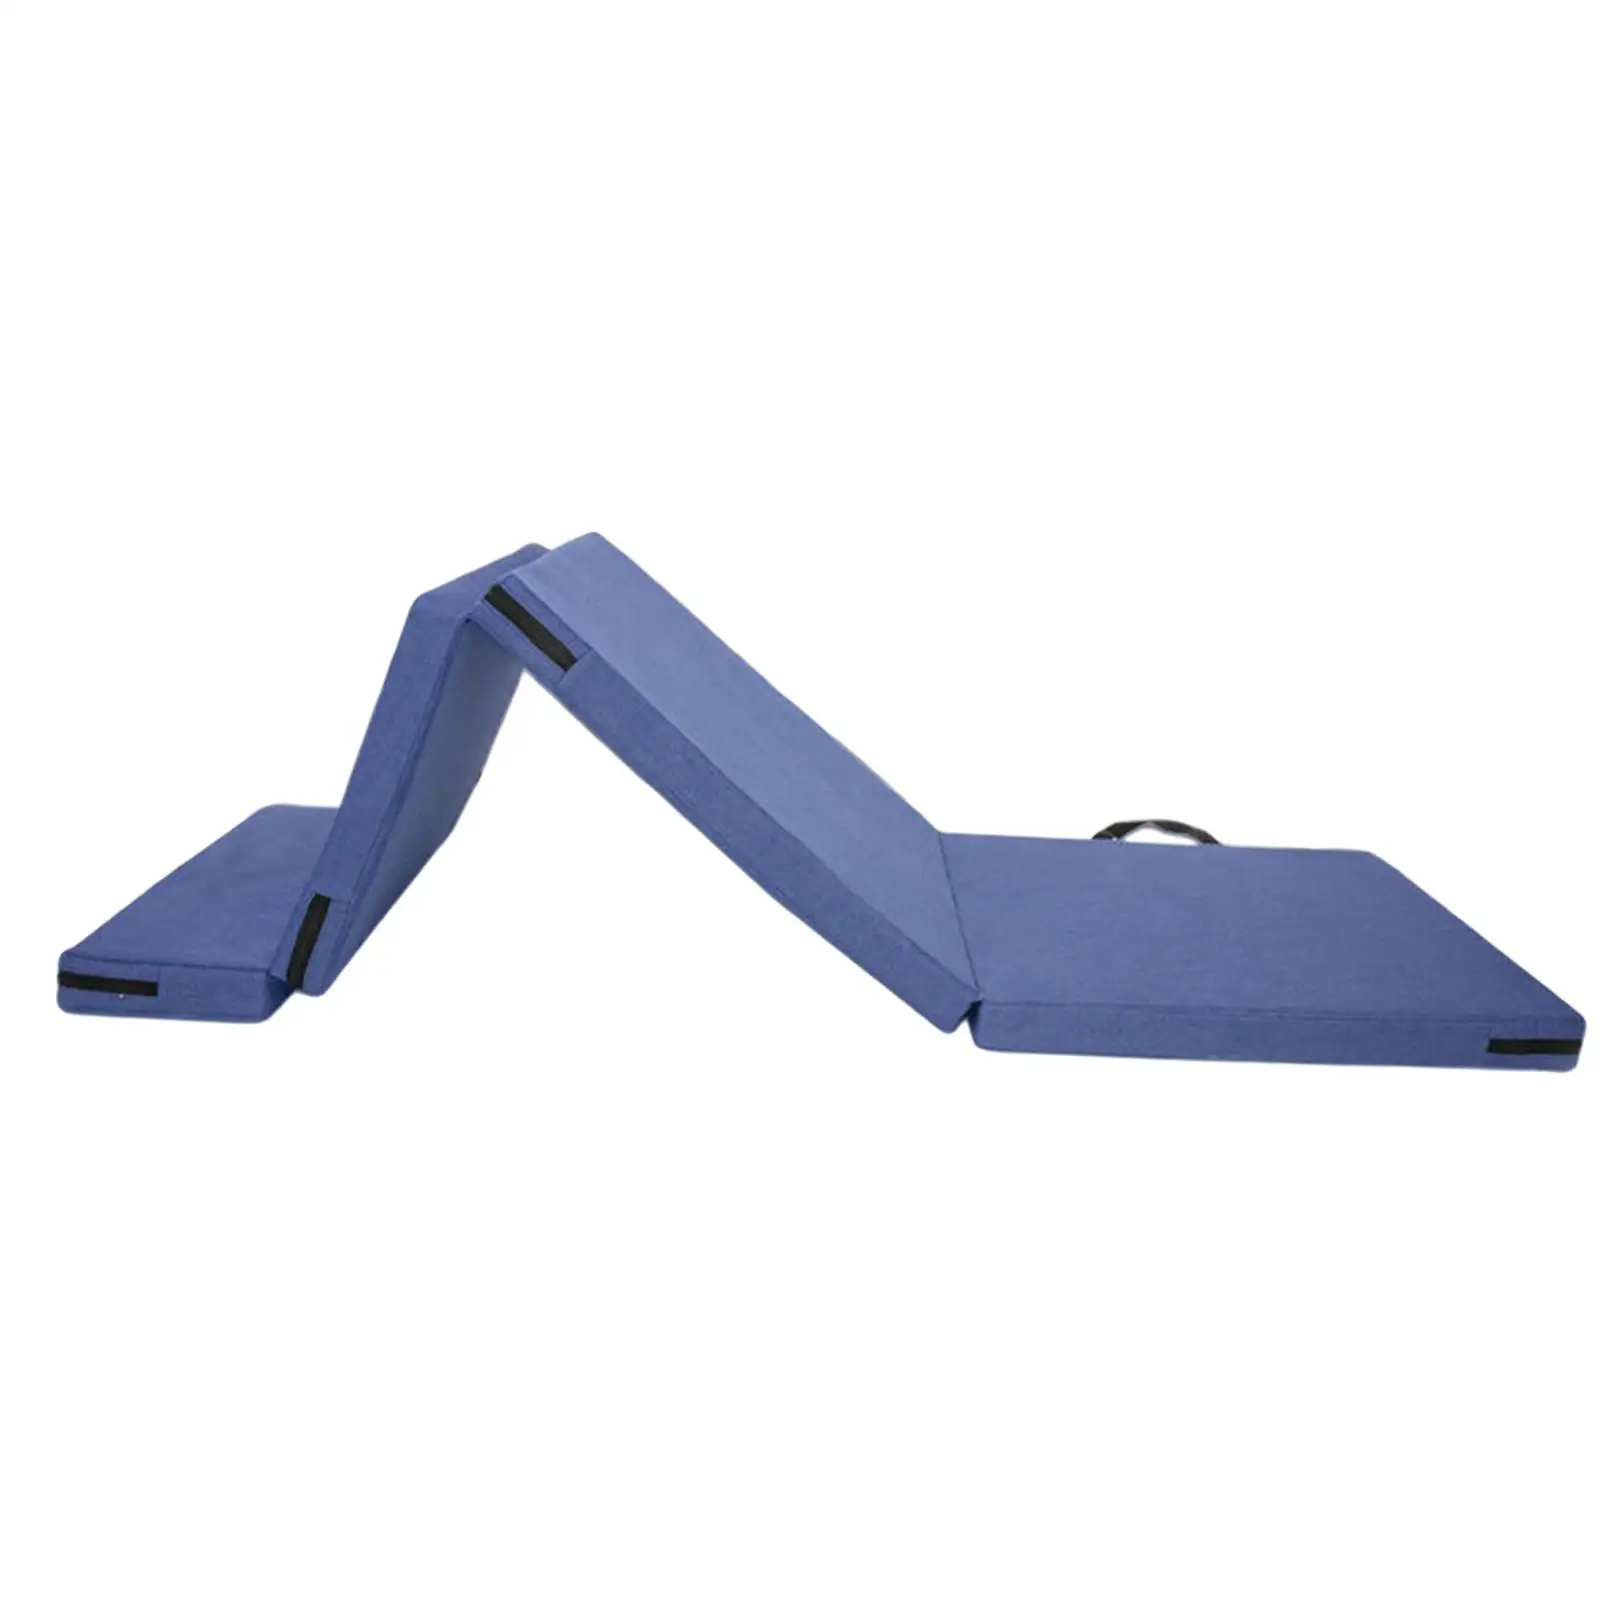 Folding Thick Exercise Mat Protective Flooring Fitness Mat Sleeping Pad for Martial Arts Pilates Gymnastics Gym Tumbling